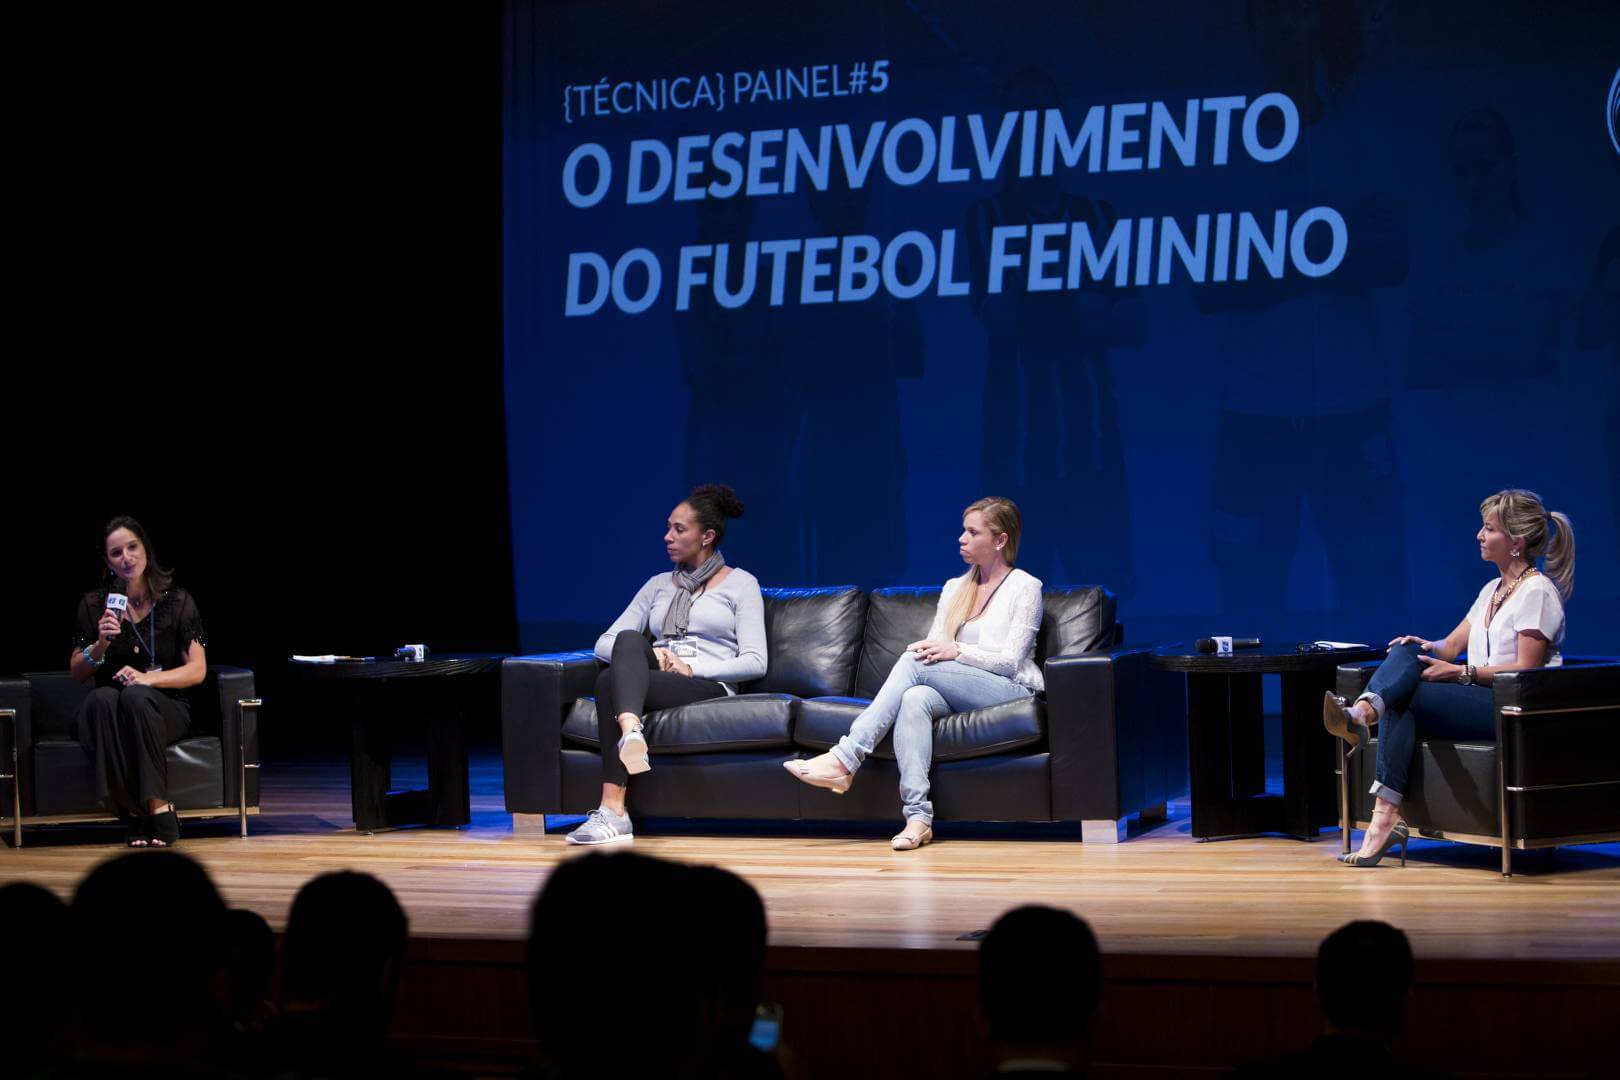 Destaque para o Futebol Feminino com Beth Romero, Aline Pellegrino (FPF), Renata Ruel (ESPN) e Cris Gambare (Corinthians)  